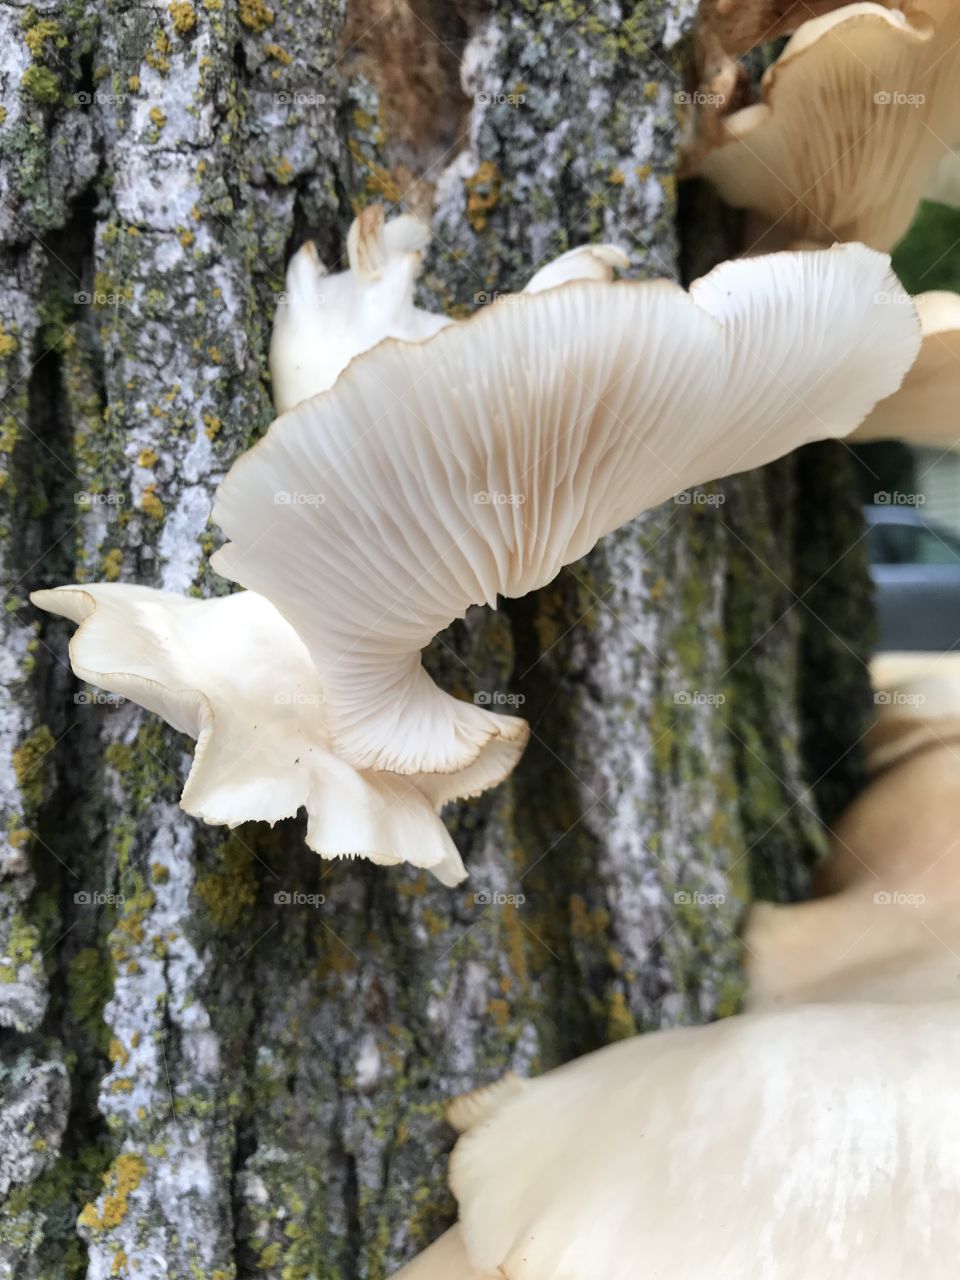 Tree fungi 